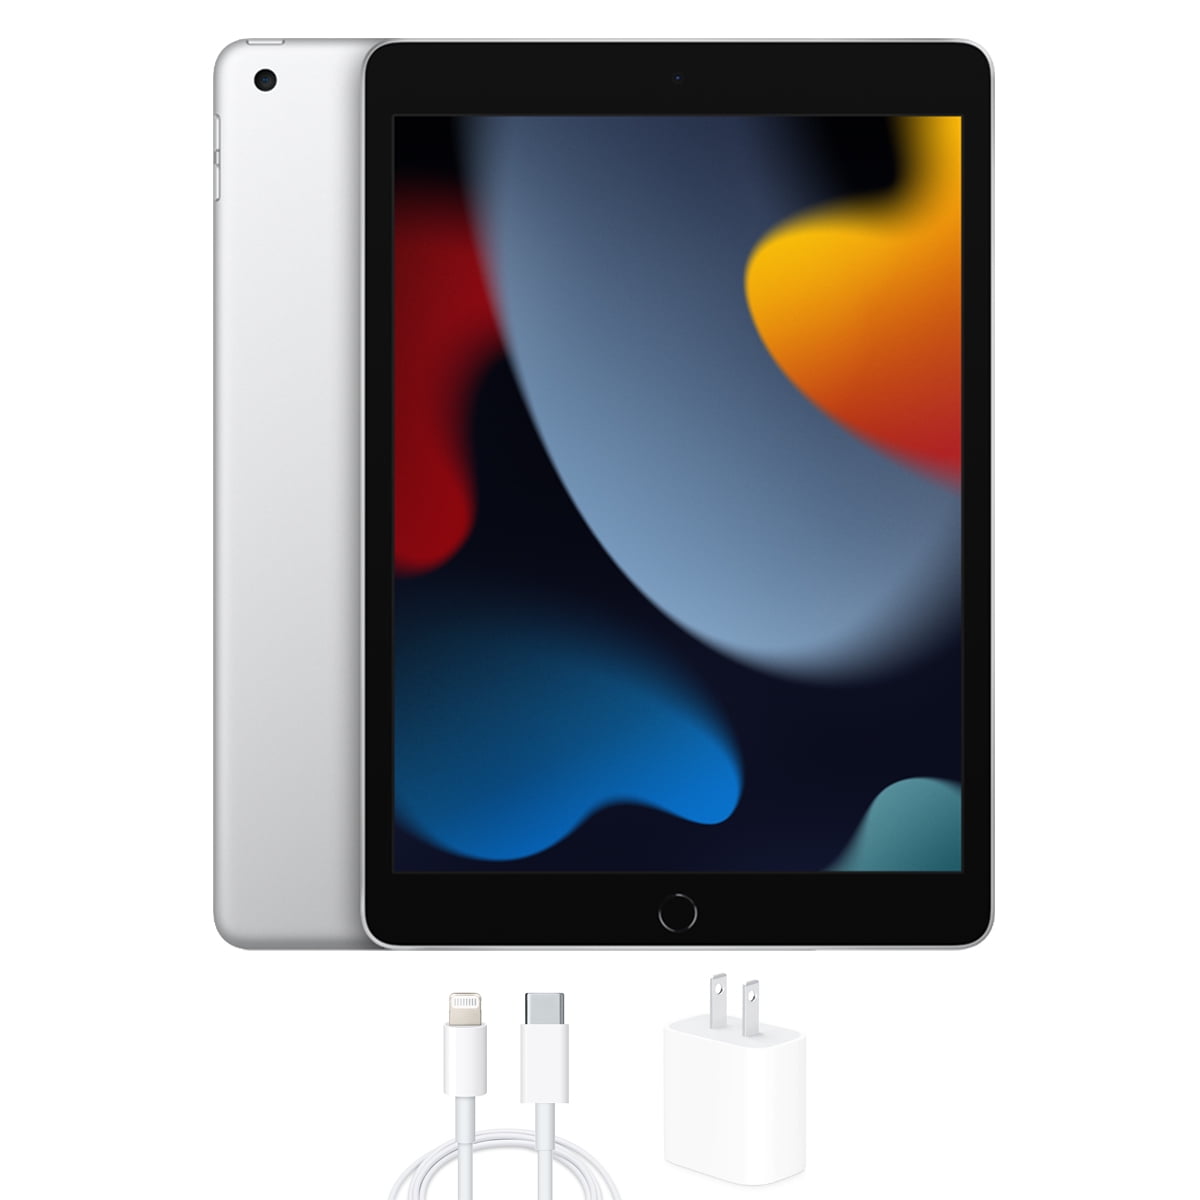 Apple iPad (5thGEneration) Wi-Fi, 128GB - Space Gray (Renewed)